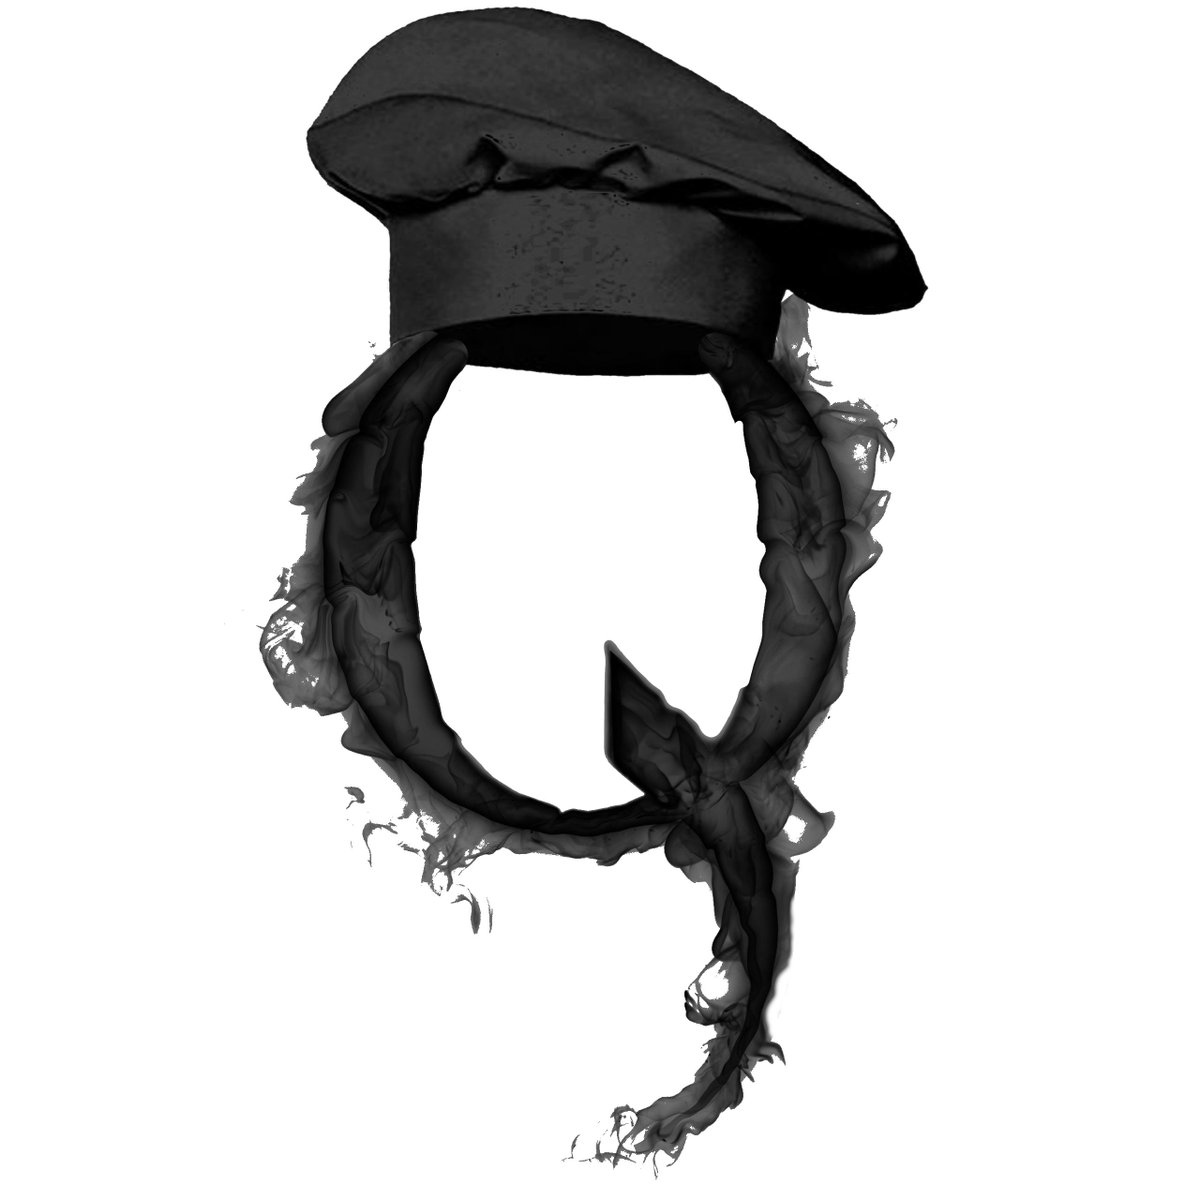 ... Proud To Be An American Q, POW-MIA Q, Nautilus shell Q, black chef's hat Q ...